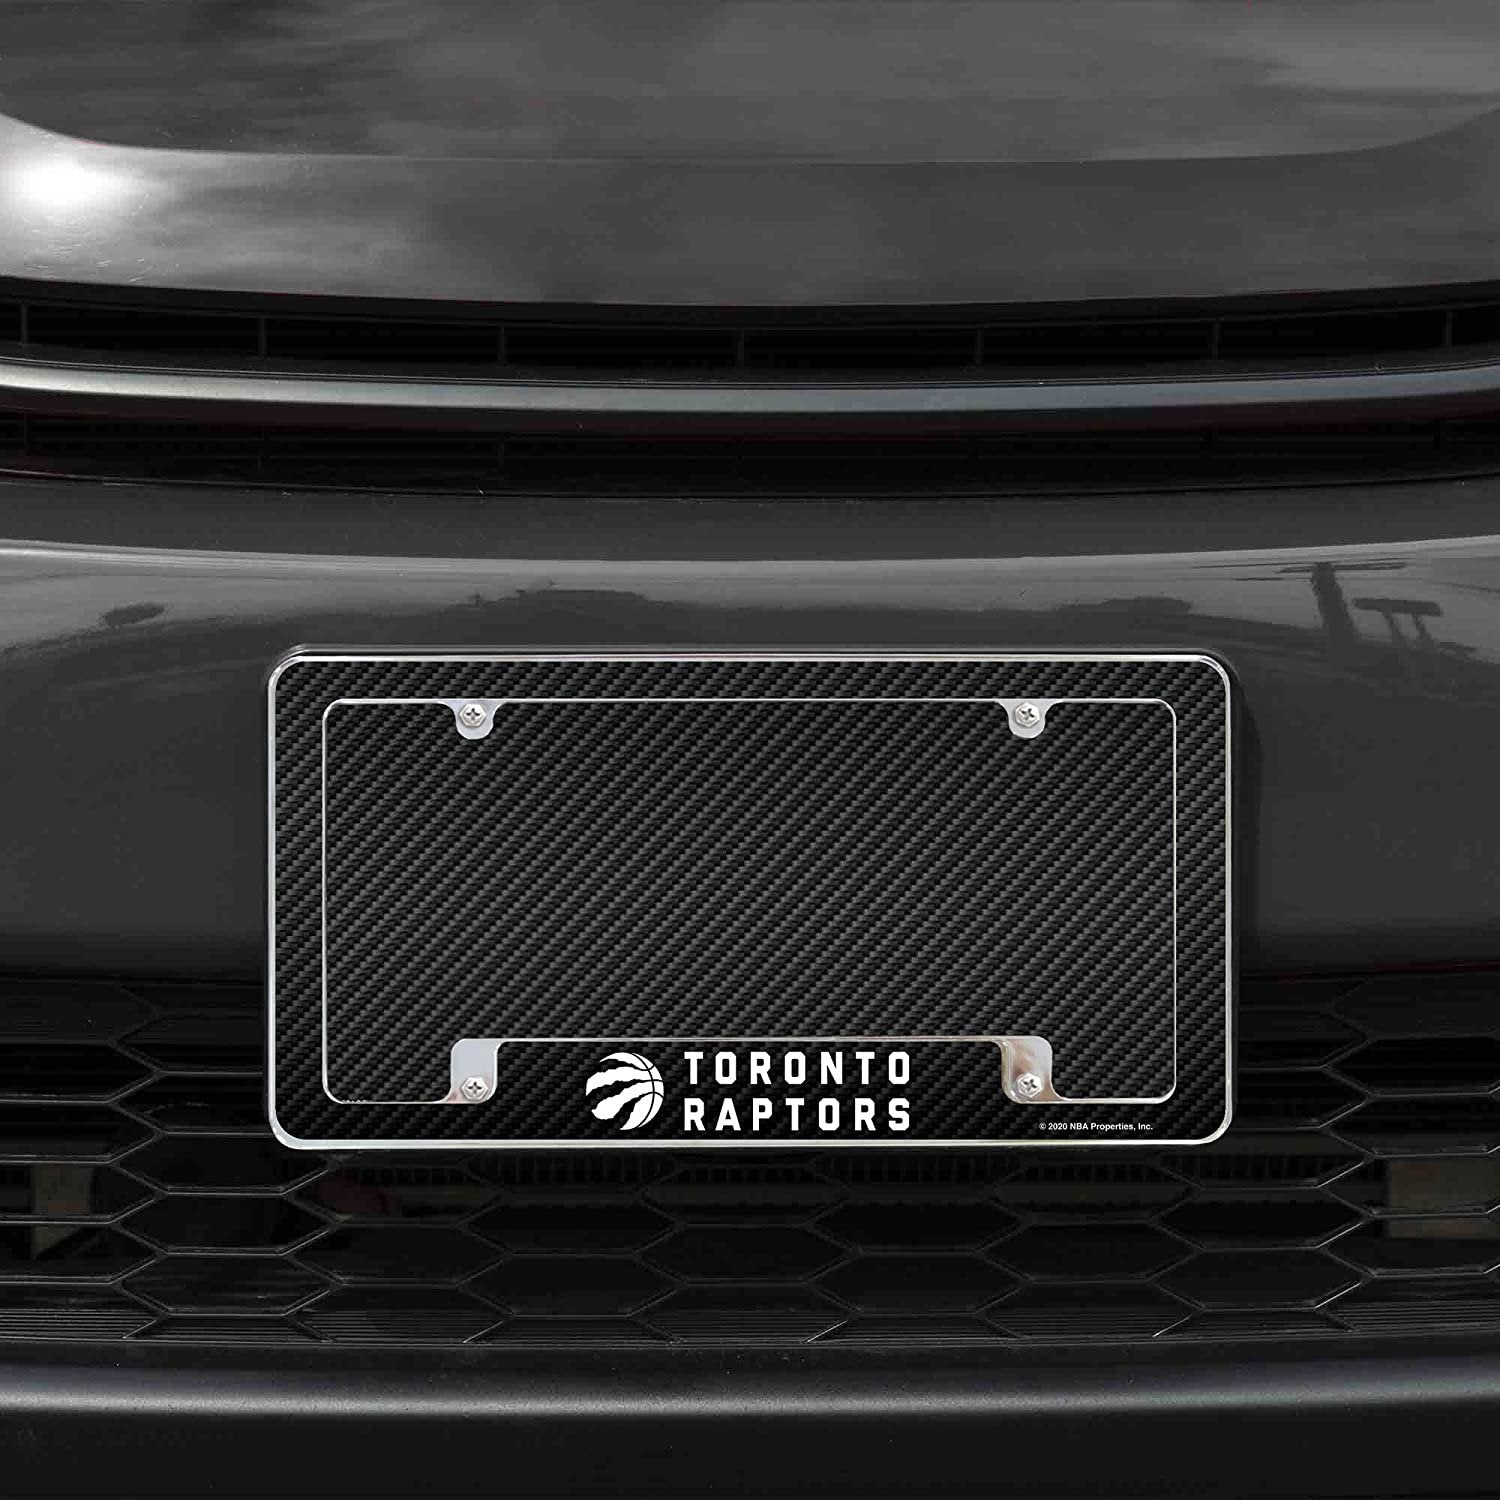 Toronto Raptors Metal License Plate Frame Chrome Tag Cover Carbon Fiber Design 6x12 Inch